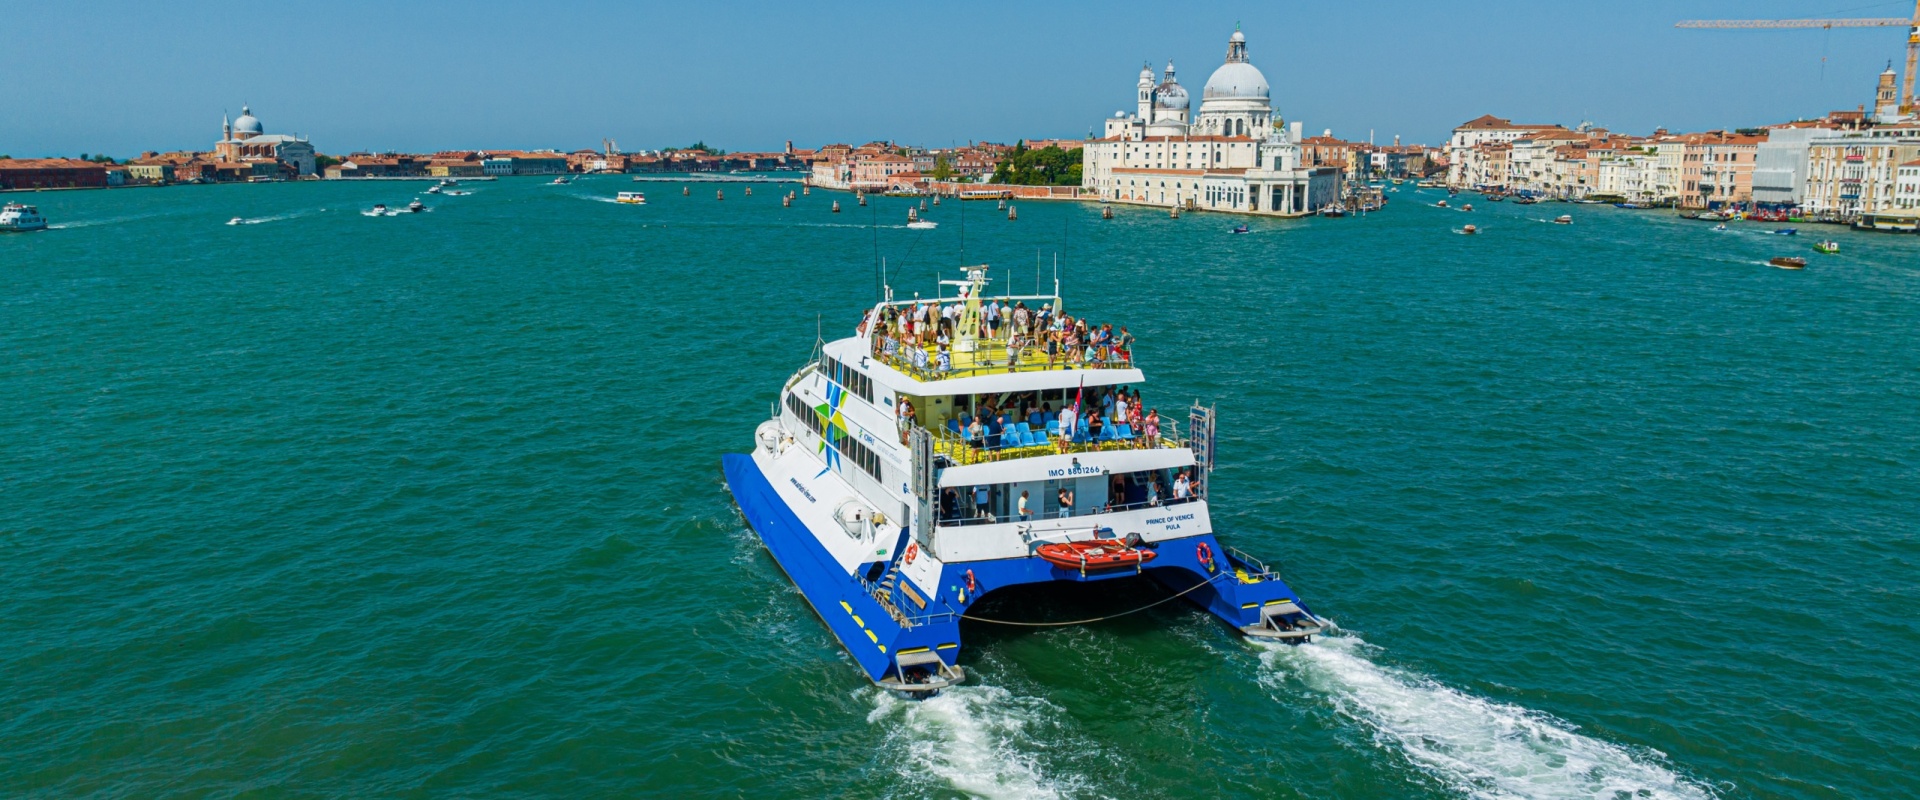 Prince of Venice catamaran in Venice | Adriatic Lines by Kompas